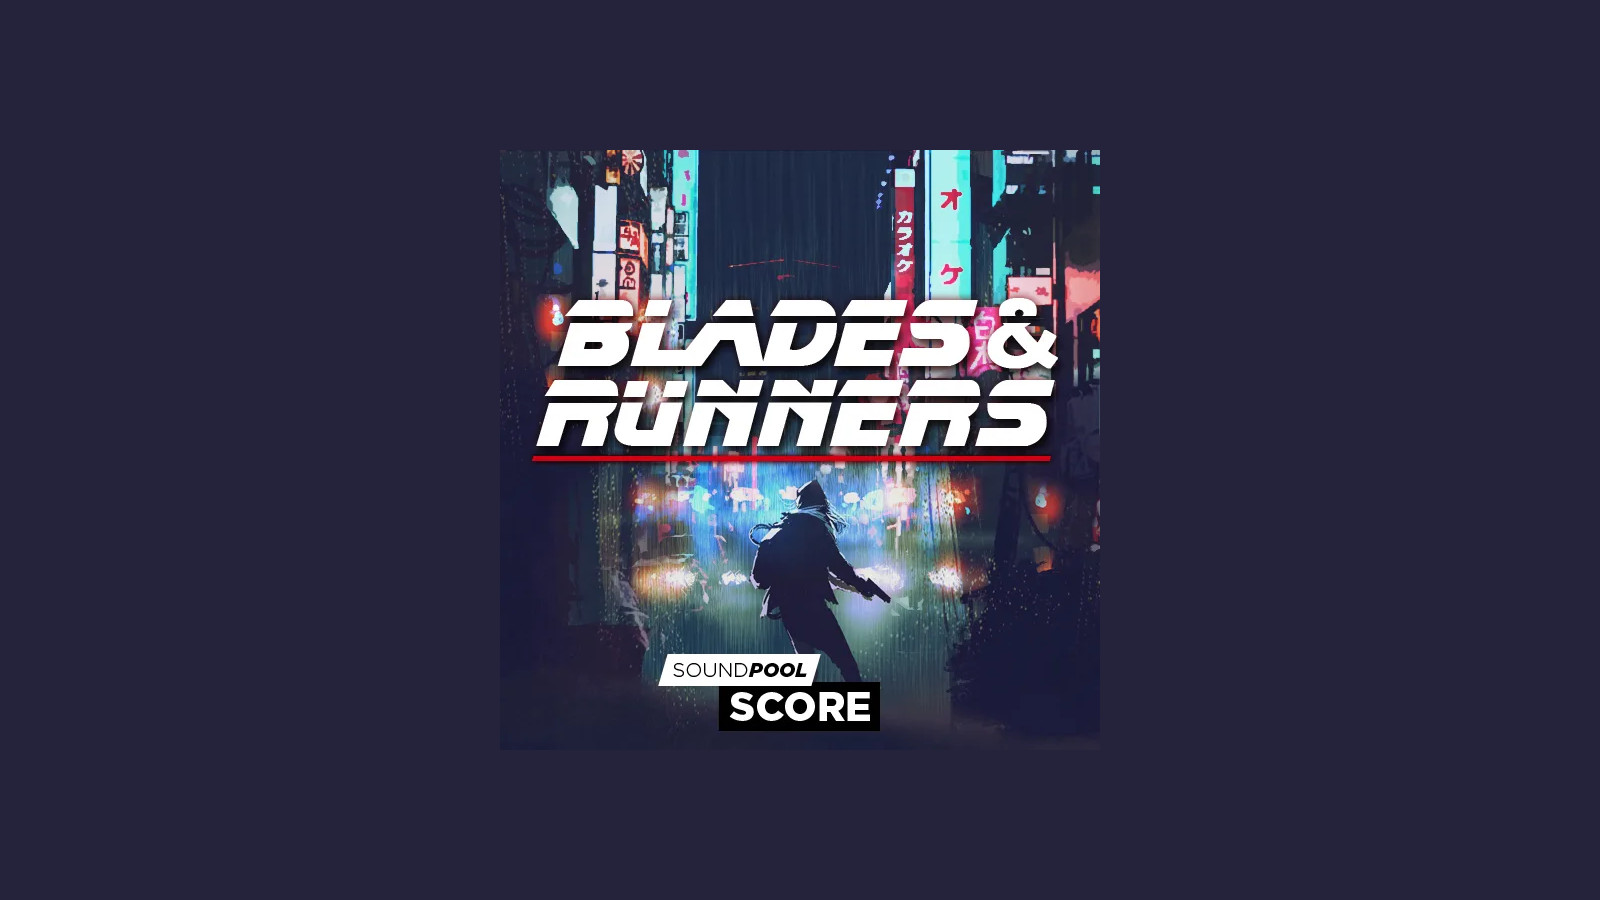 MAGIX Soundpool Blades & Runners ProducerPlanet CD Key 5.65$